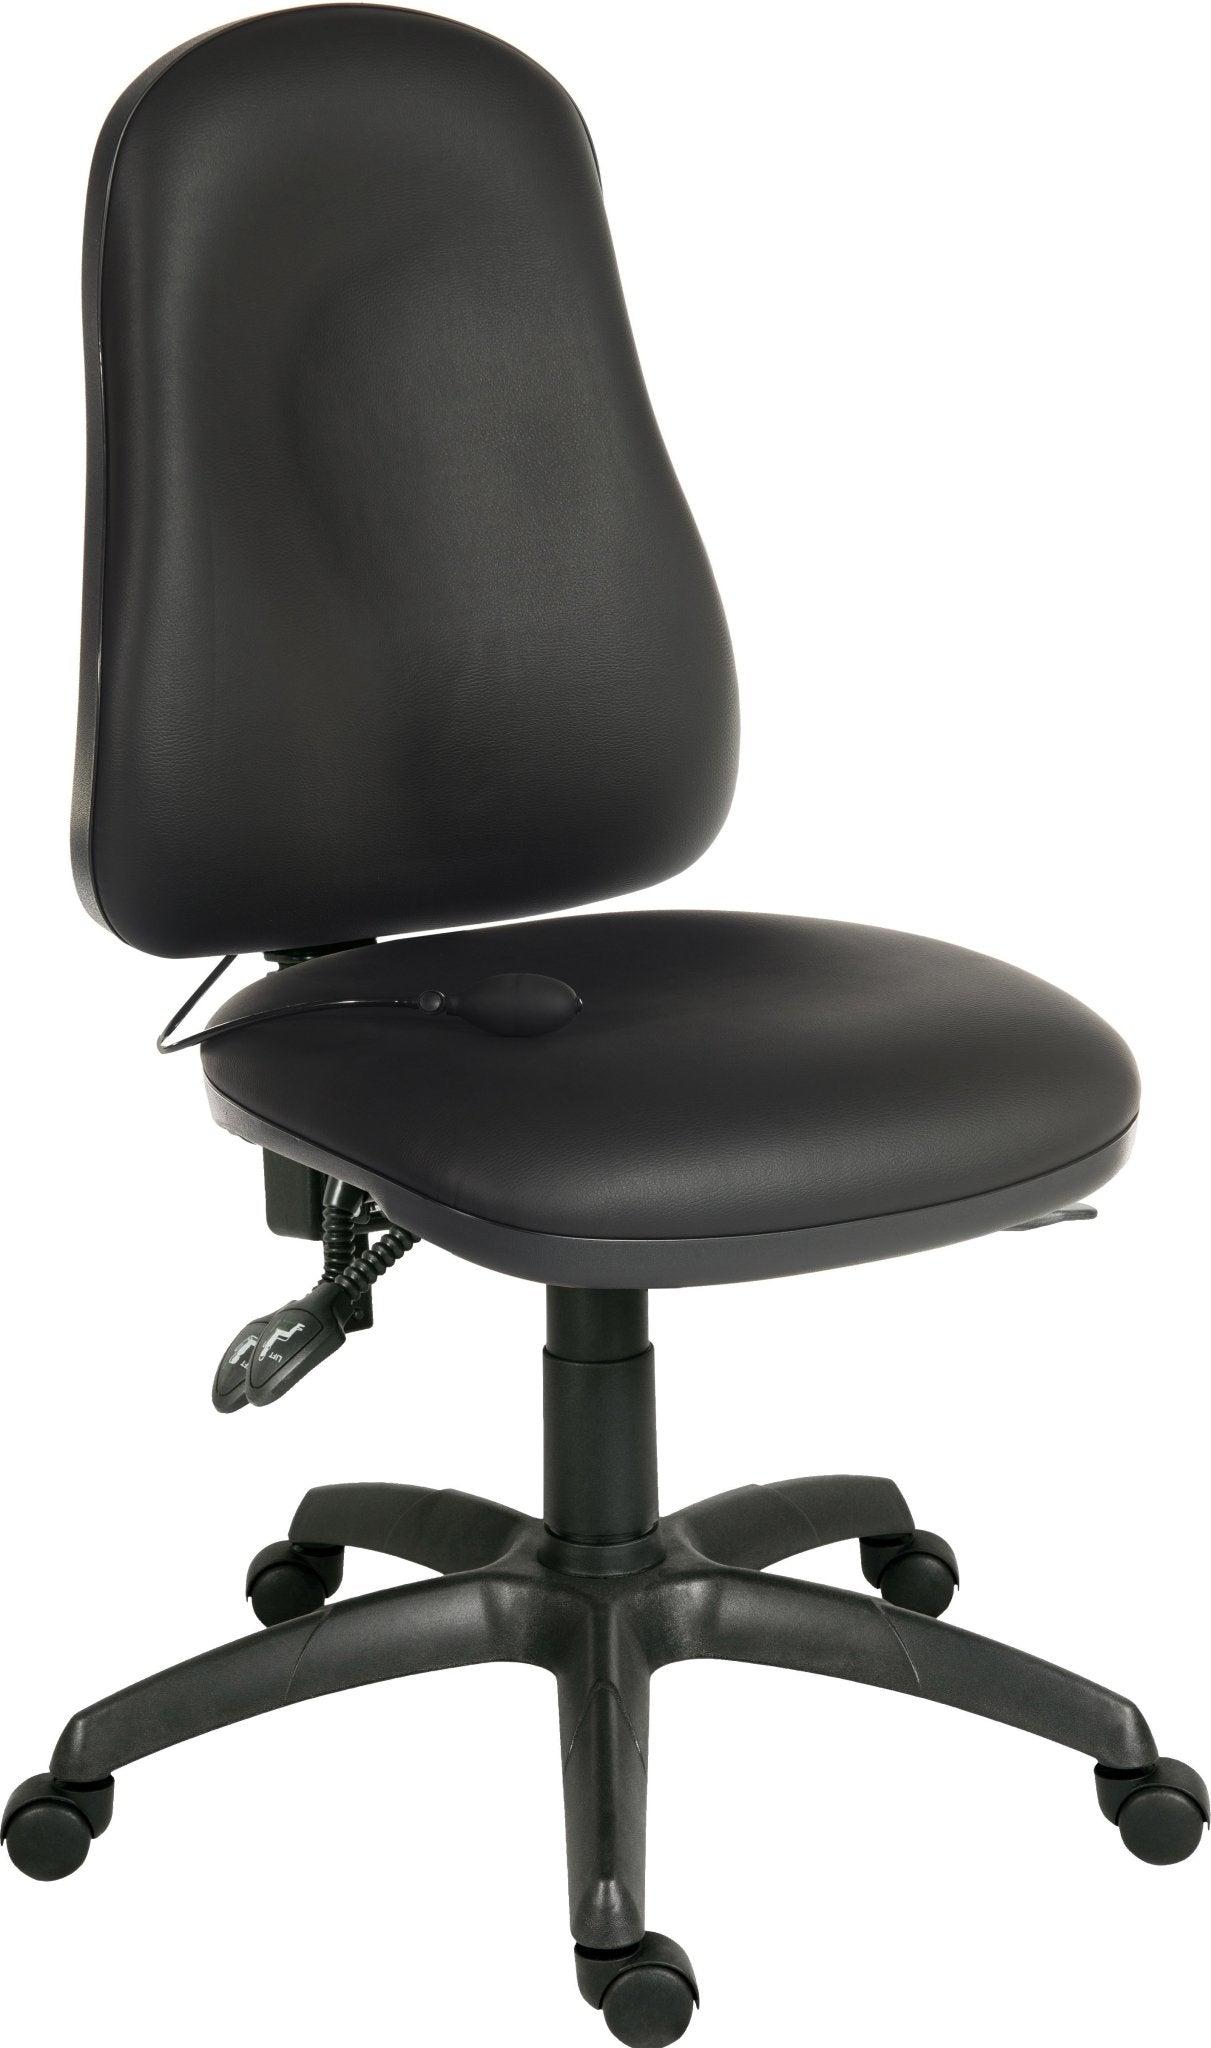 Ergo comfort air office chair in black pu - crimblefest furniture - image 1